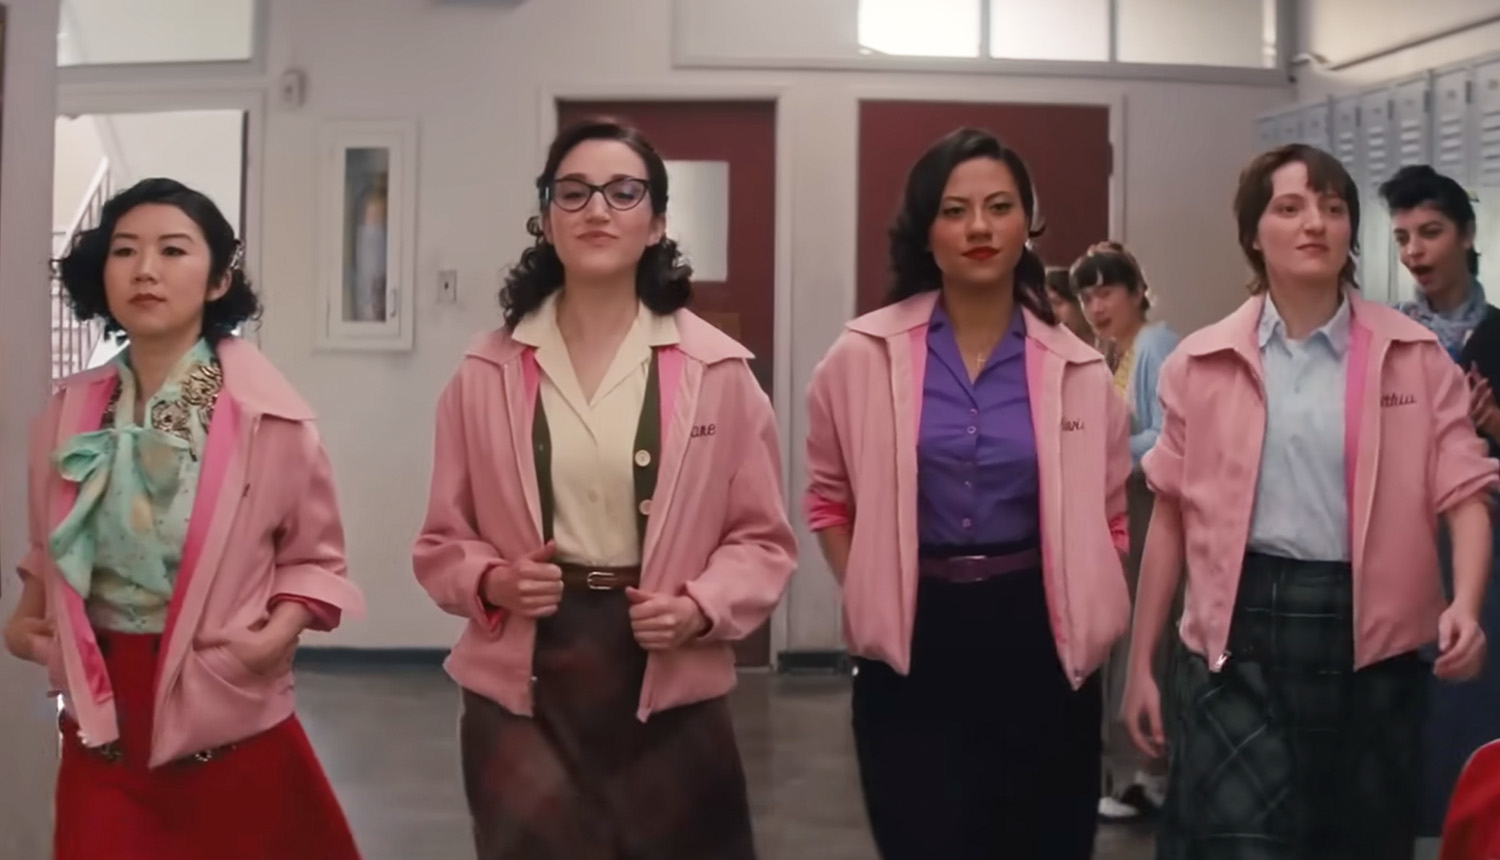 the pink ladies walking in the hallway